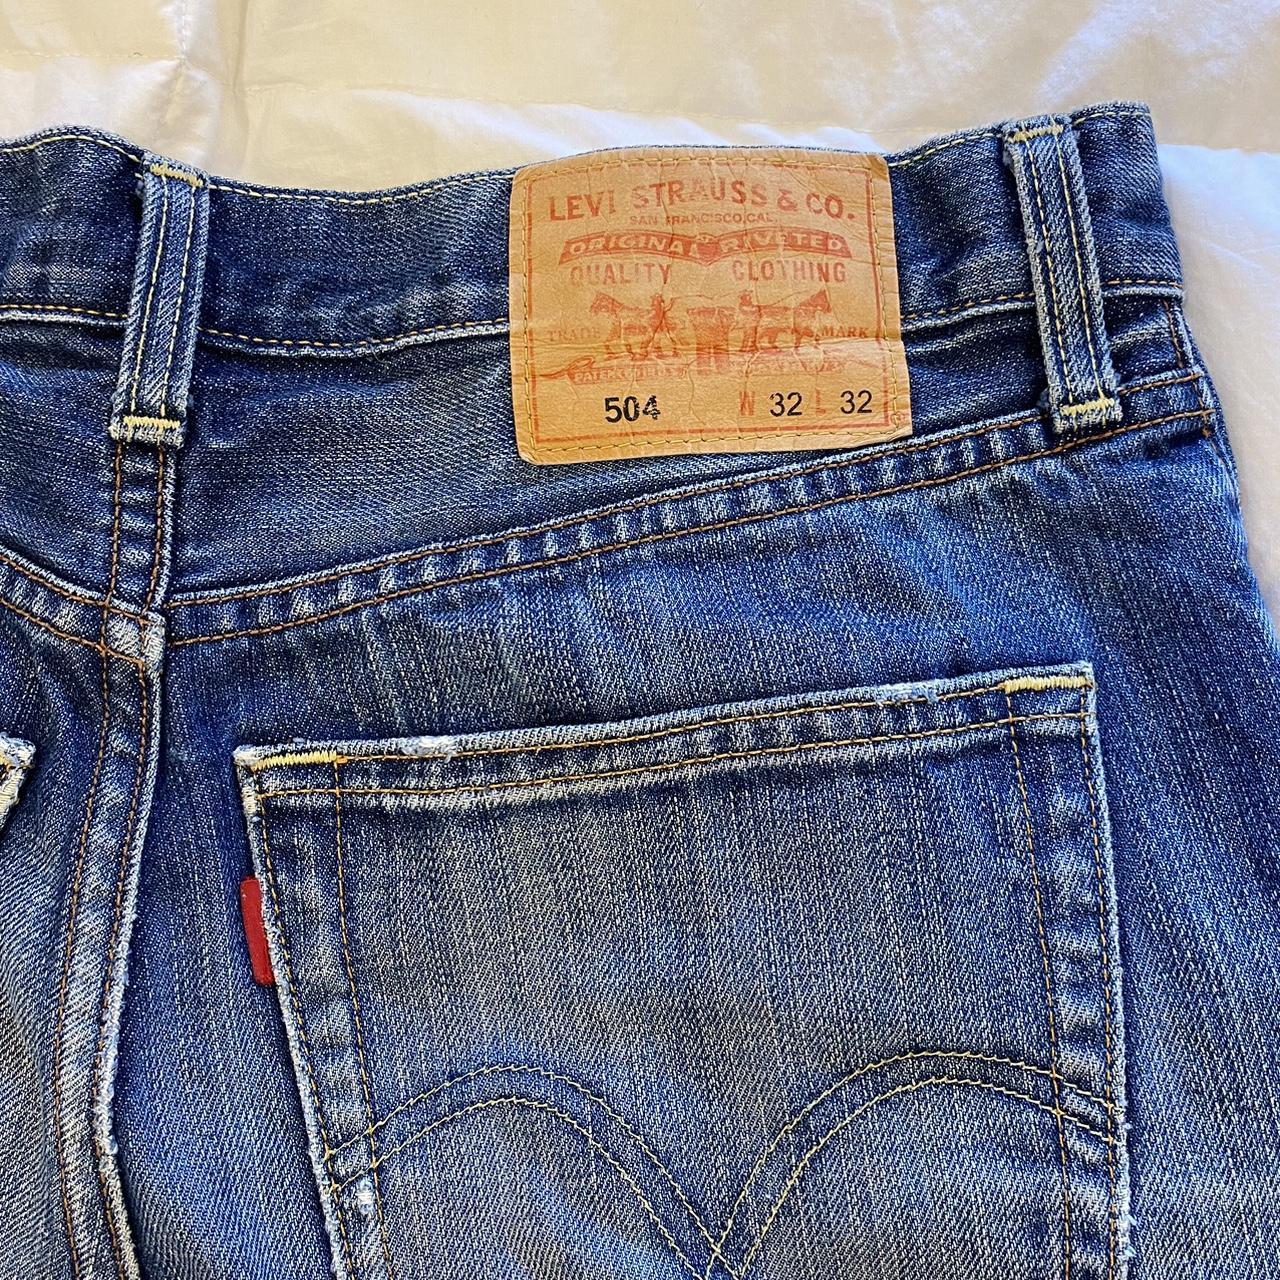 levi’s vintage jeans 504 minor stain (see last picture) - Depop